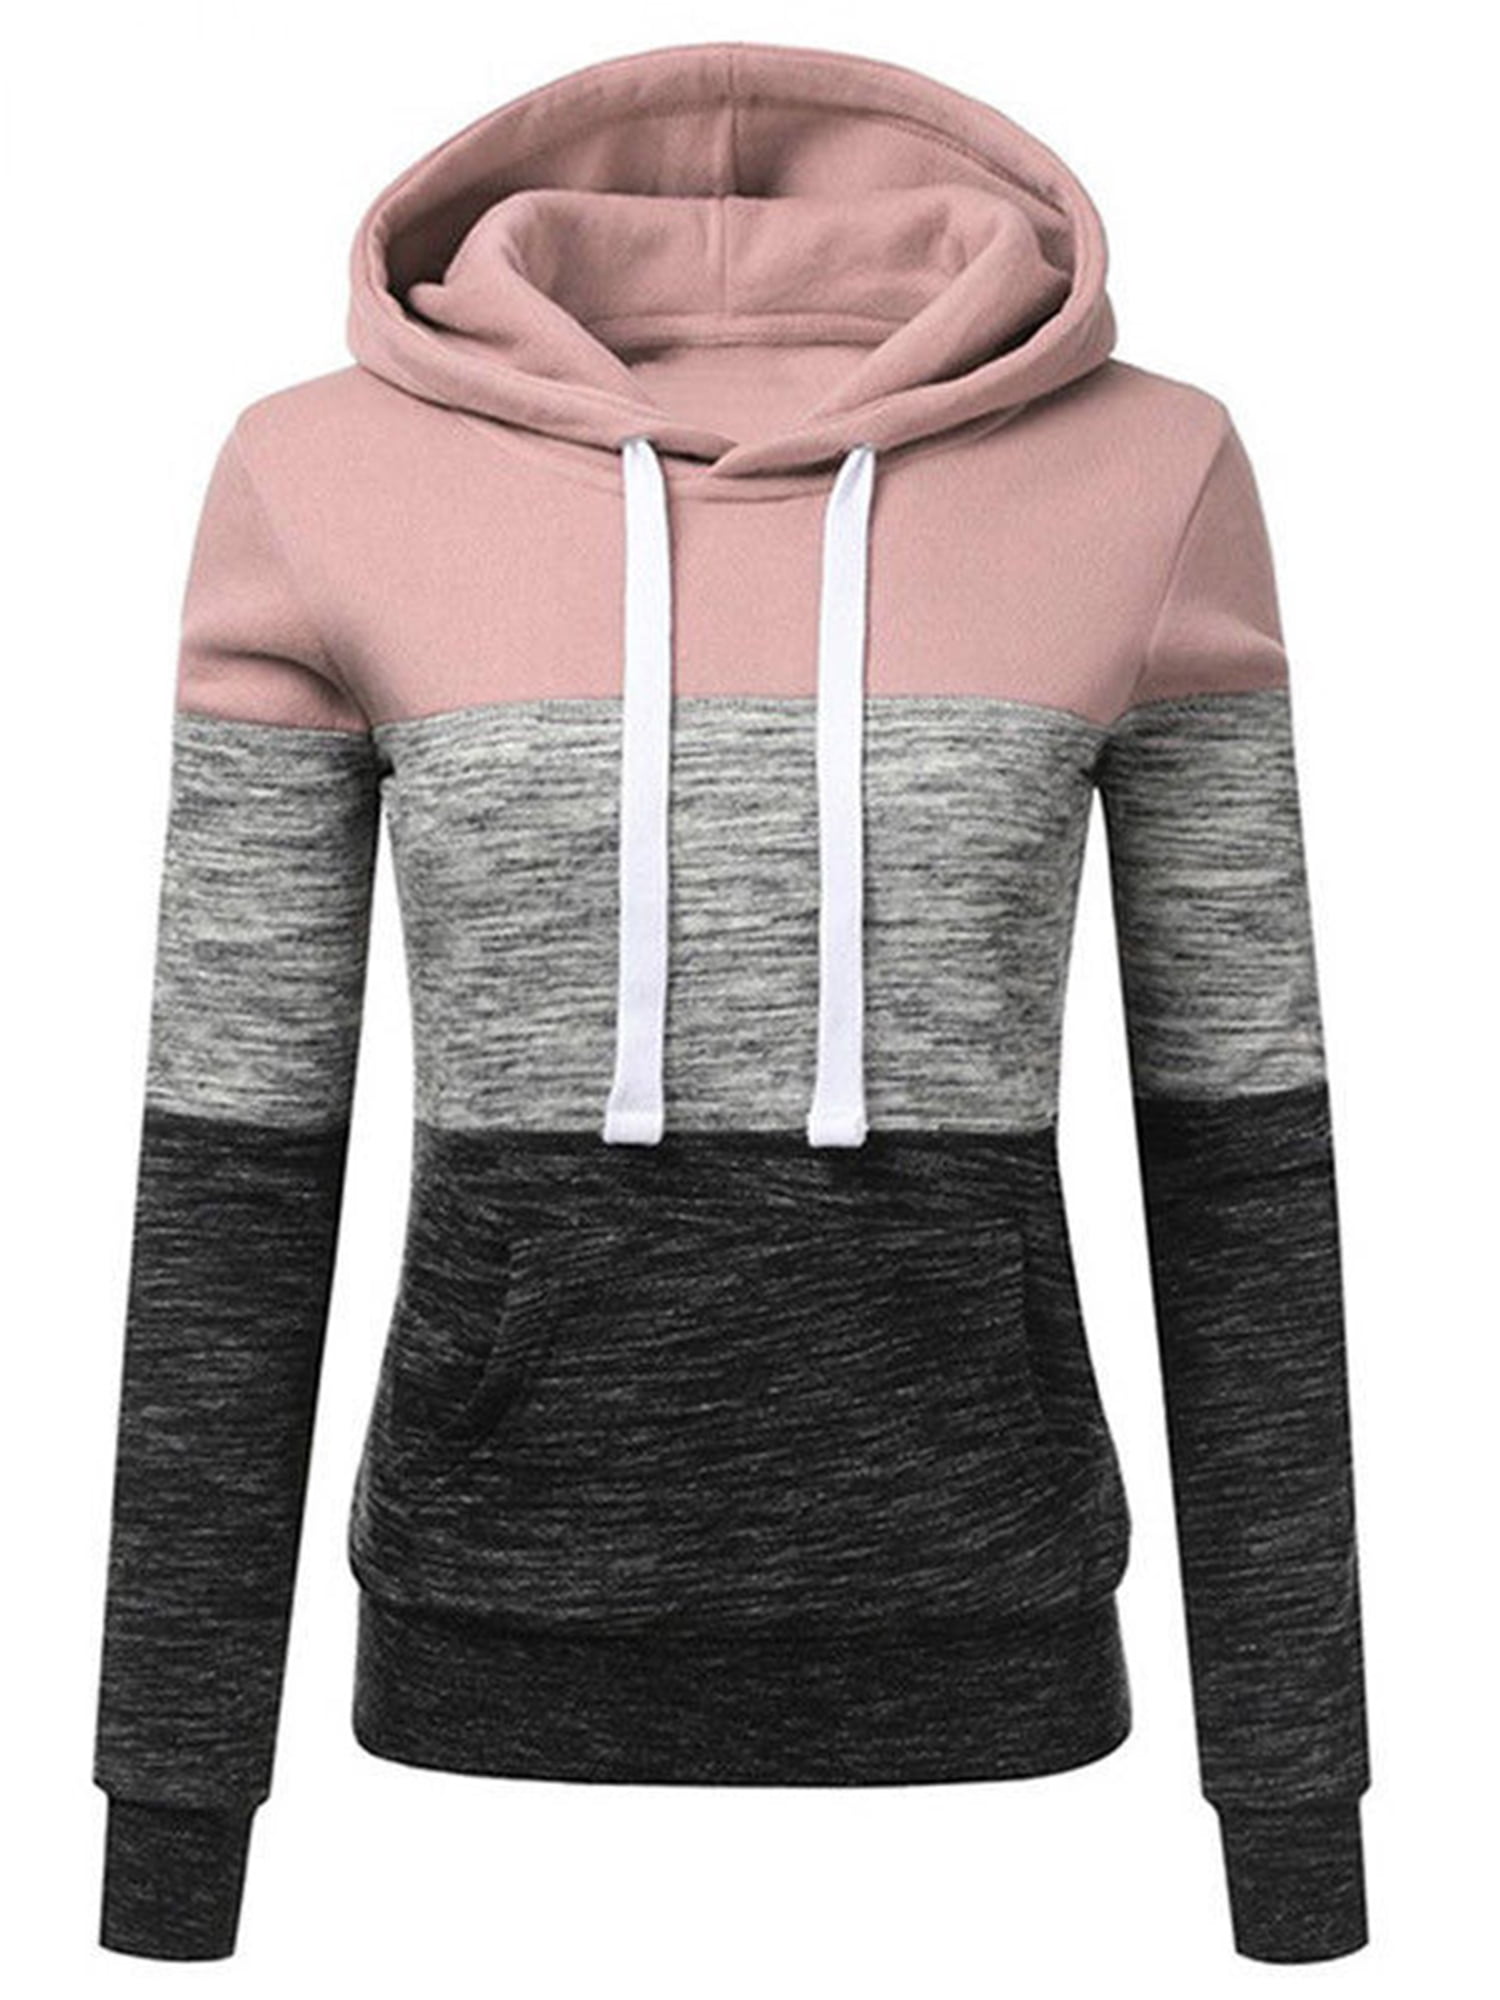 Type O Negative Womans Hoodies Warm Drawstring Long Sleeve Sweatshirt 